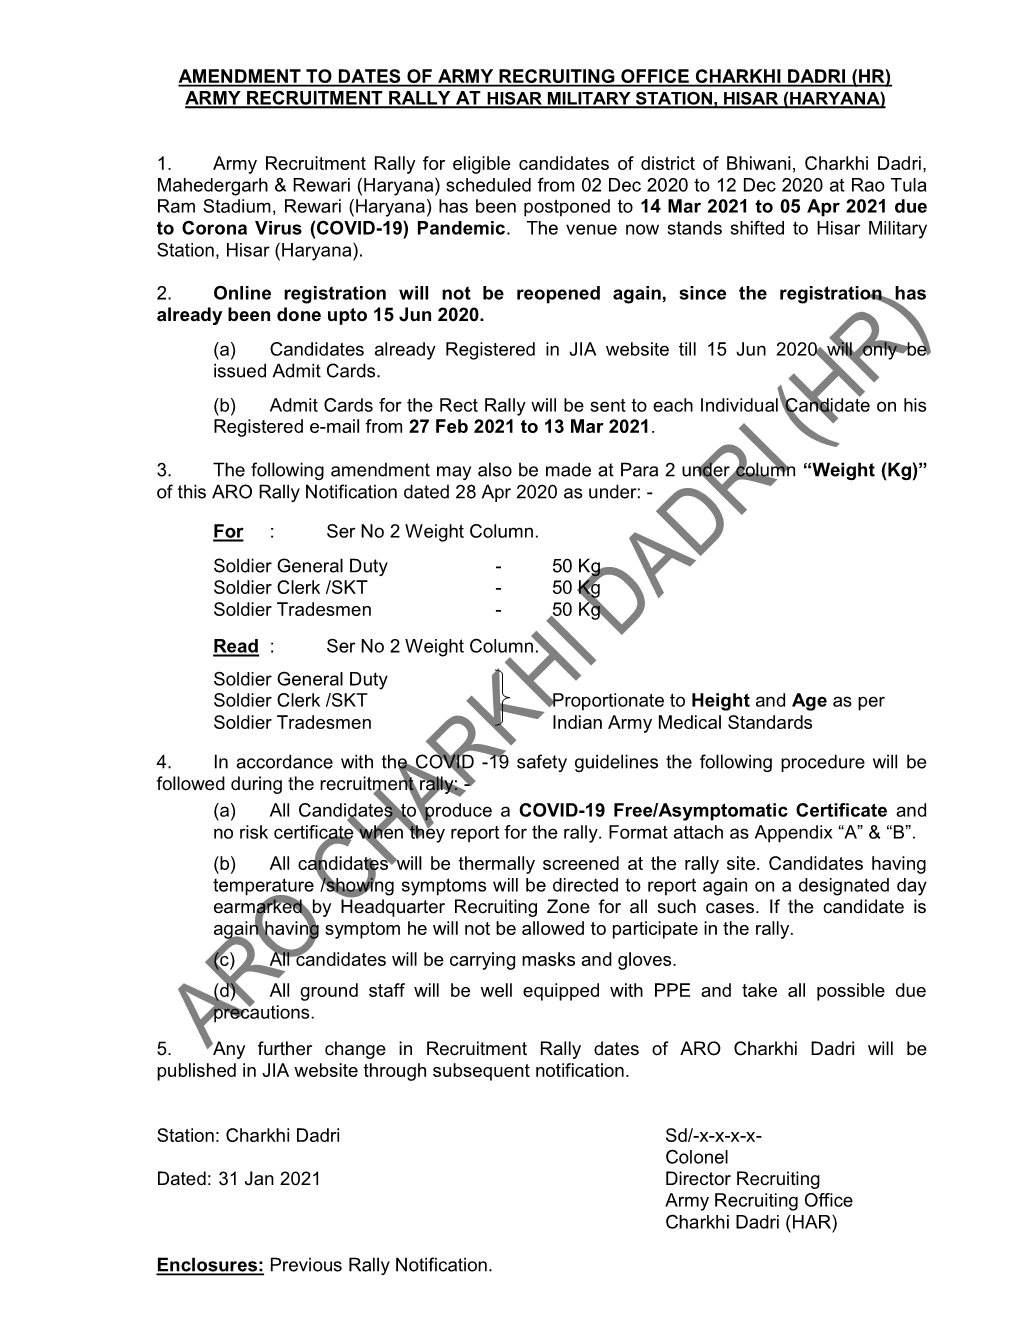 Amendment to Dates of Army Recruiting Office Charkhi Dadri (Hr) Army Recruitment Rally at Hisar Military Station, Hisar (Haryana)